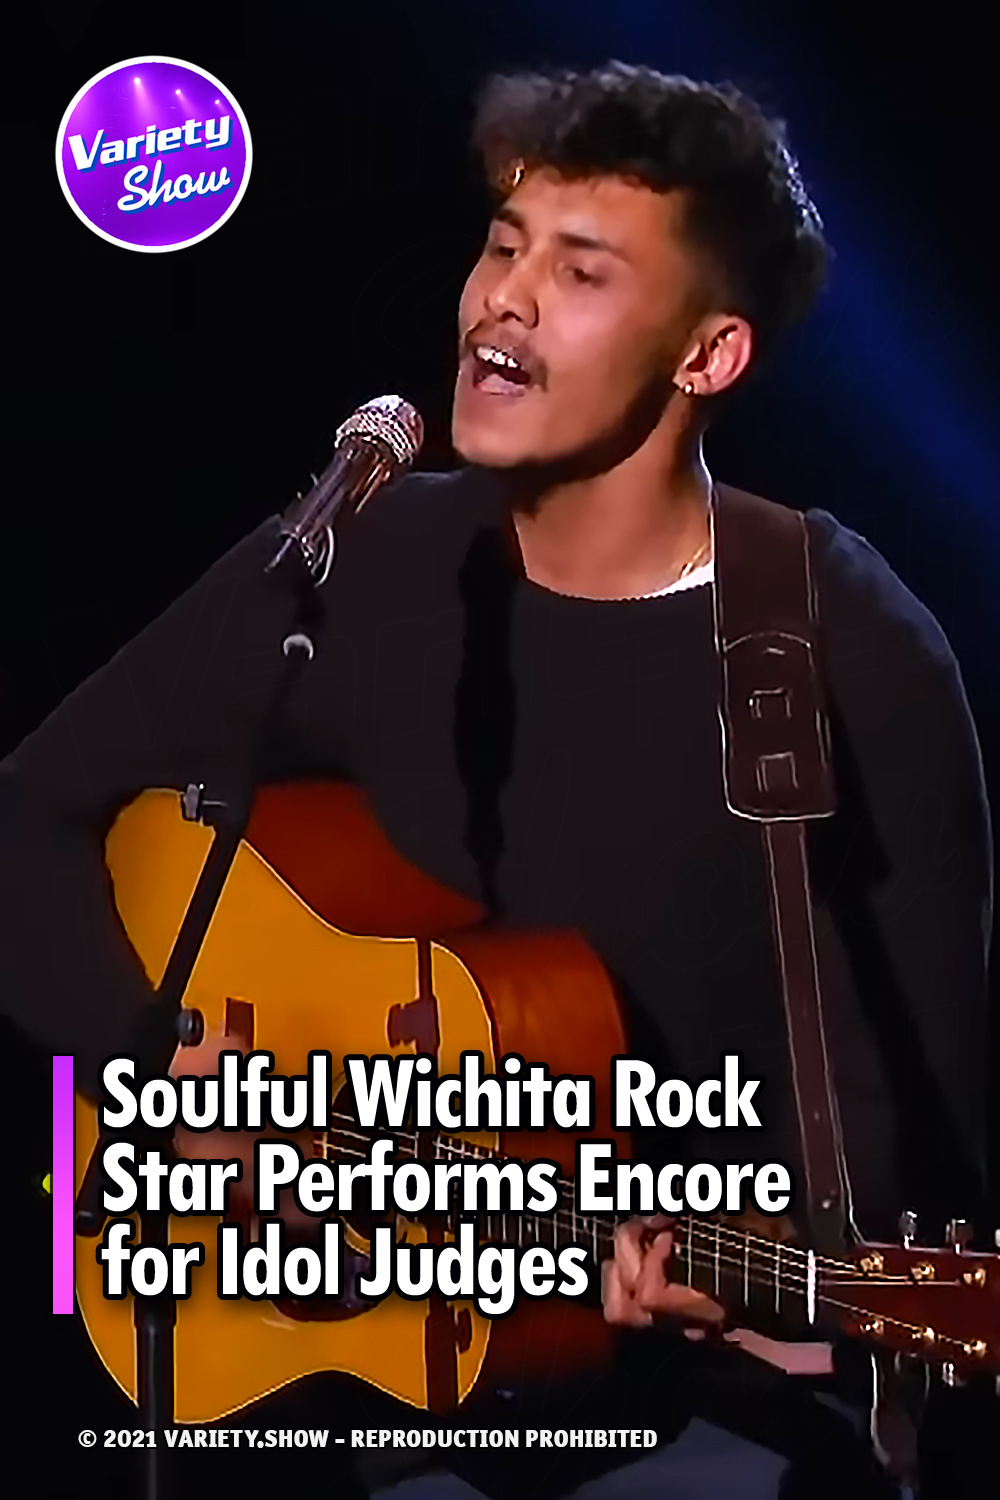 Soulful Wichita Rock Star Performs Encore for Idol Judges